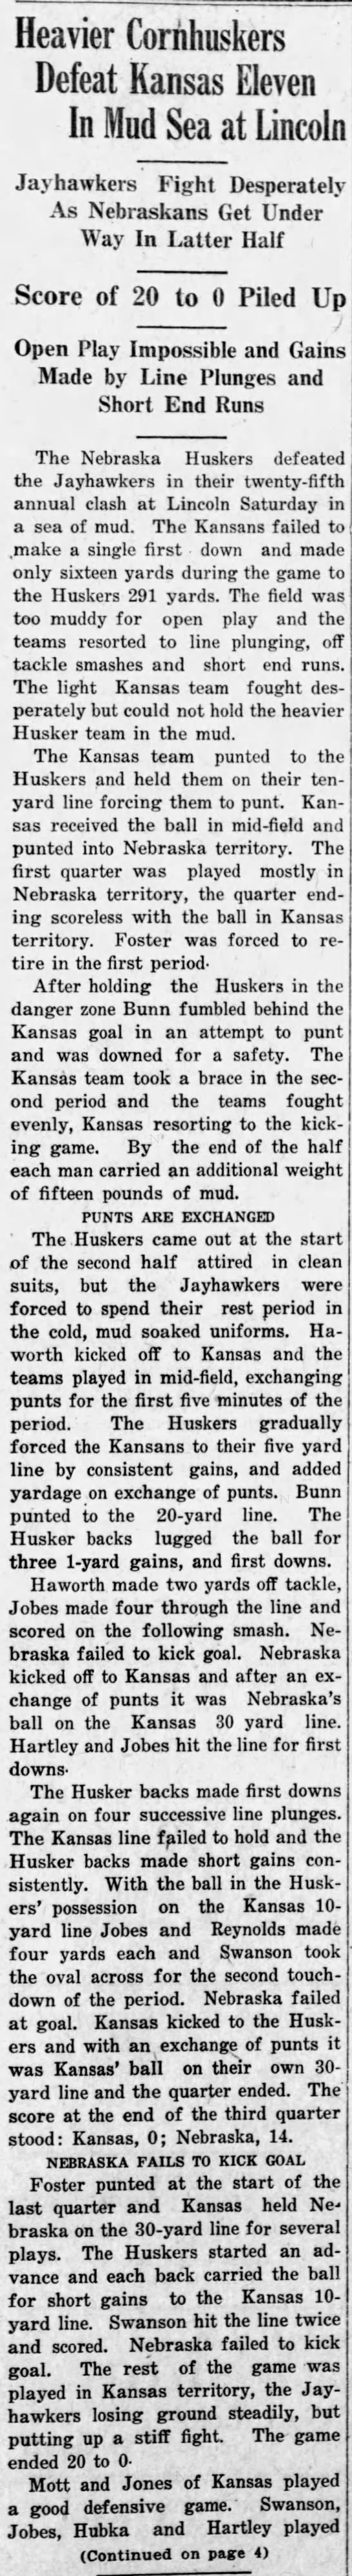 1918 Nebraska vs Kansas football, KU Daily1 - 